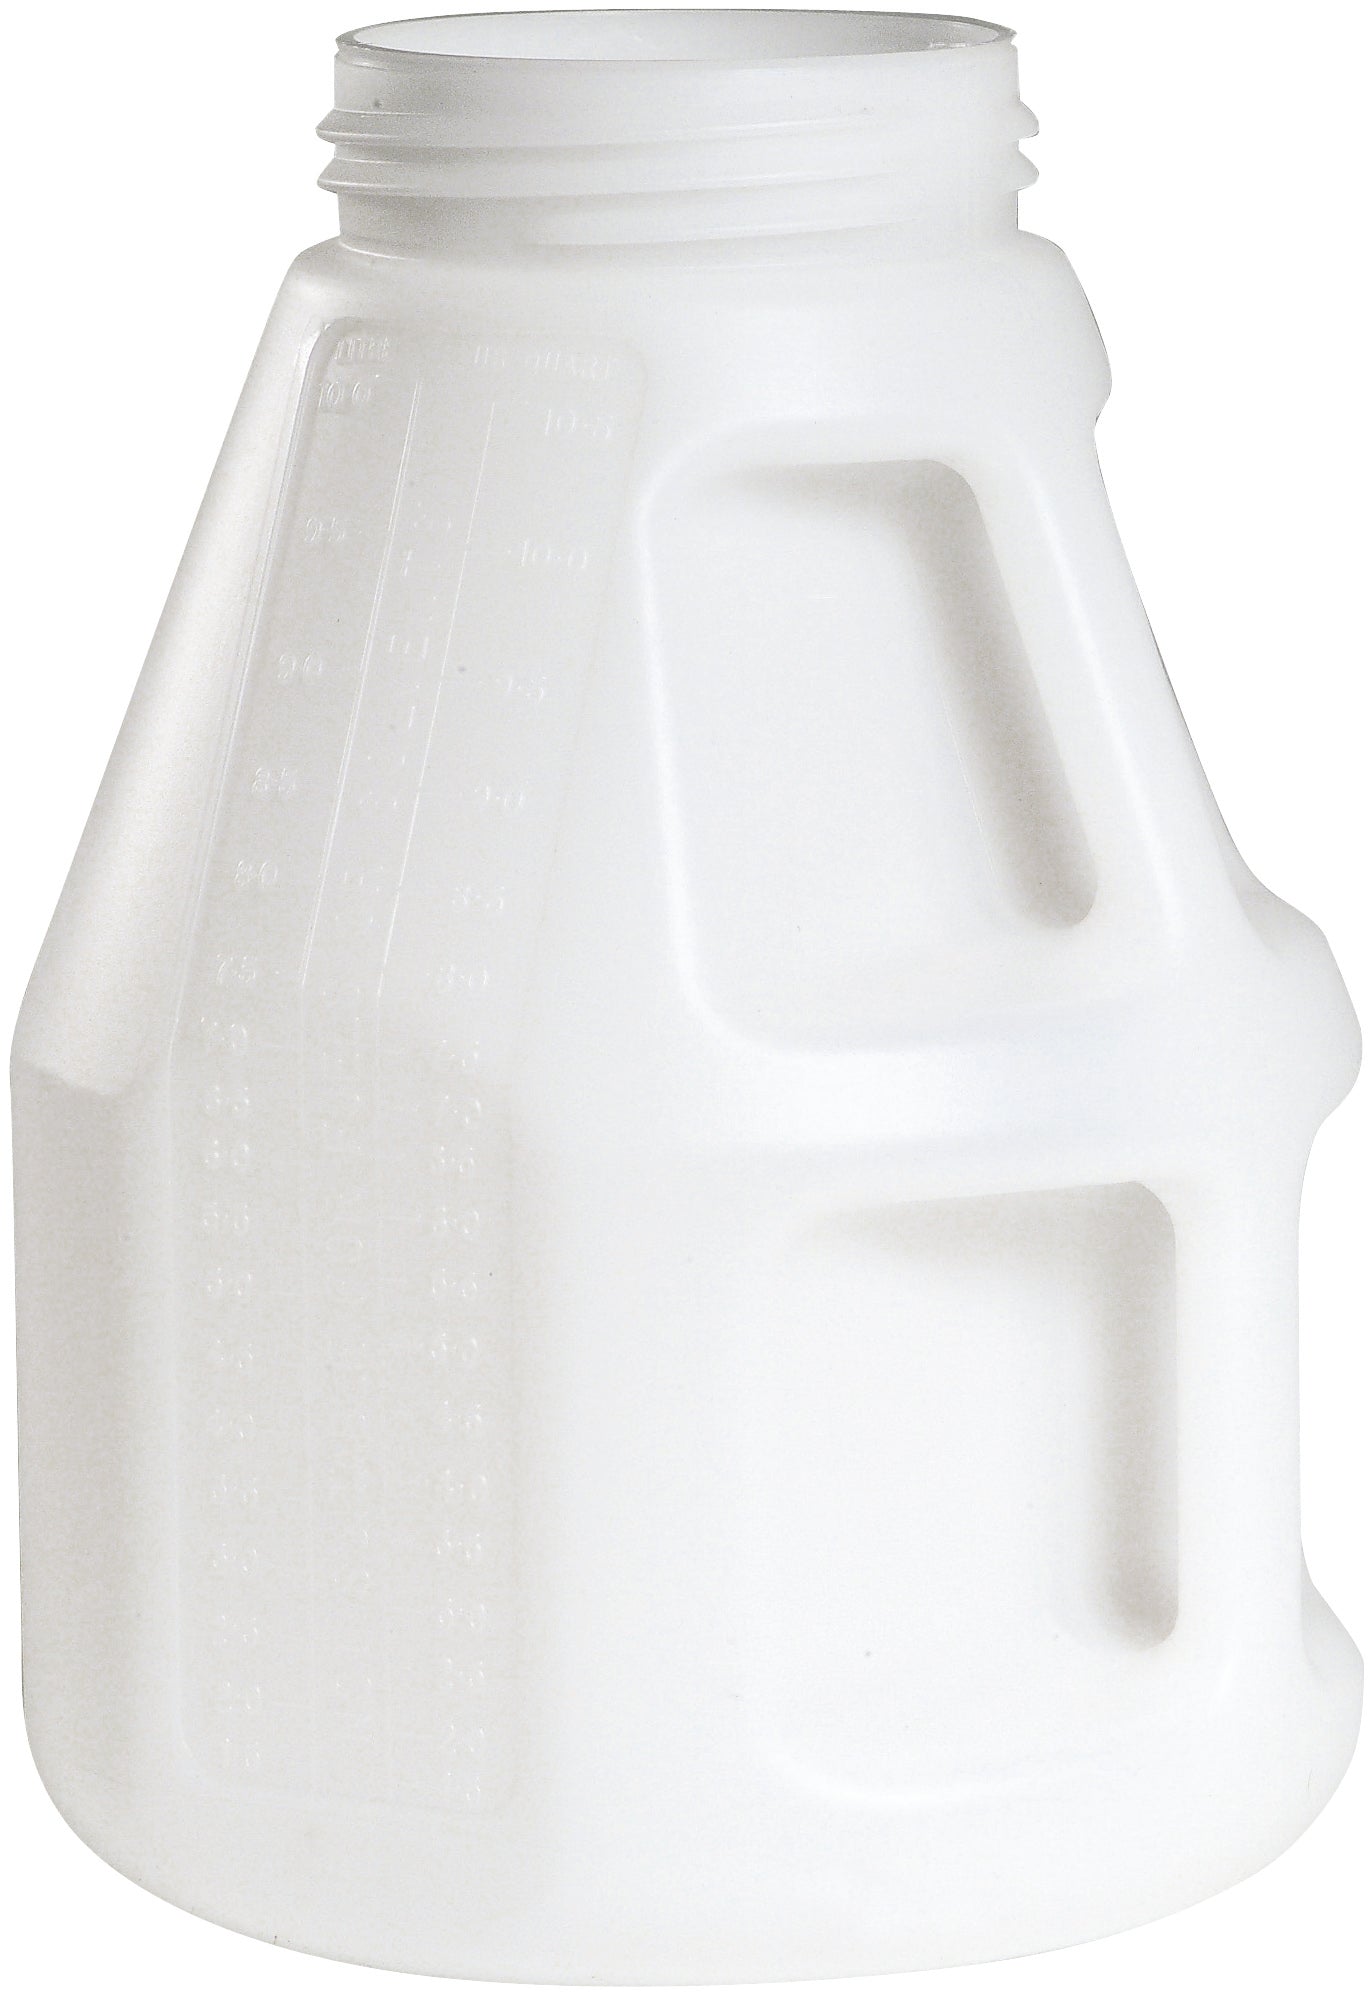 Oil can PE-HD white, 10 L 245 x 350 mm, polyethylen (high density)